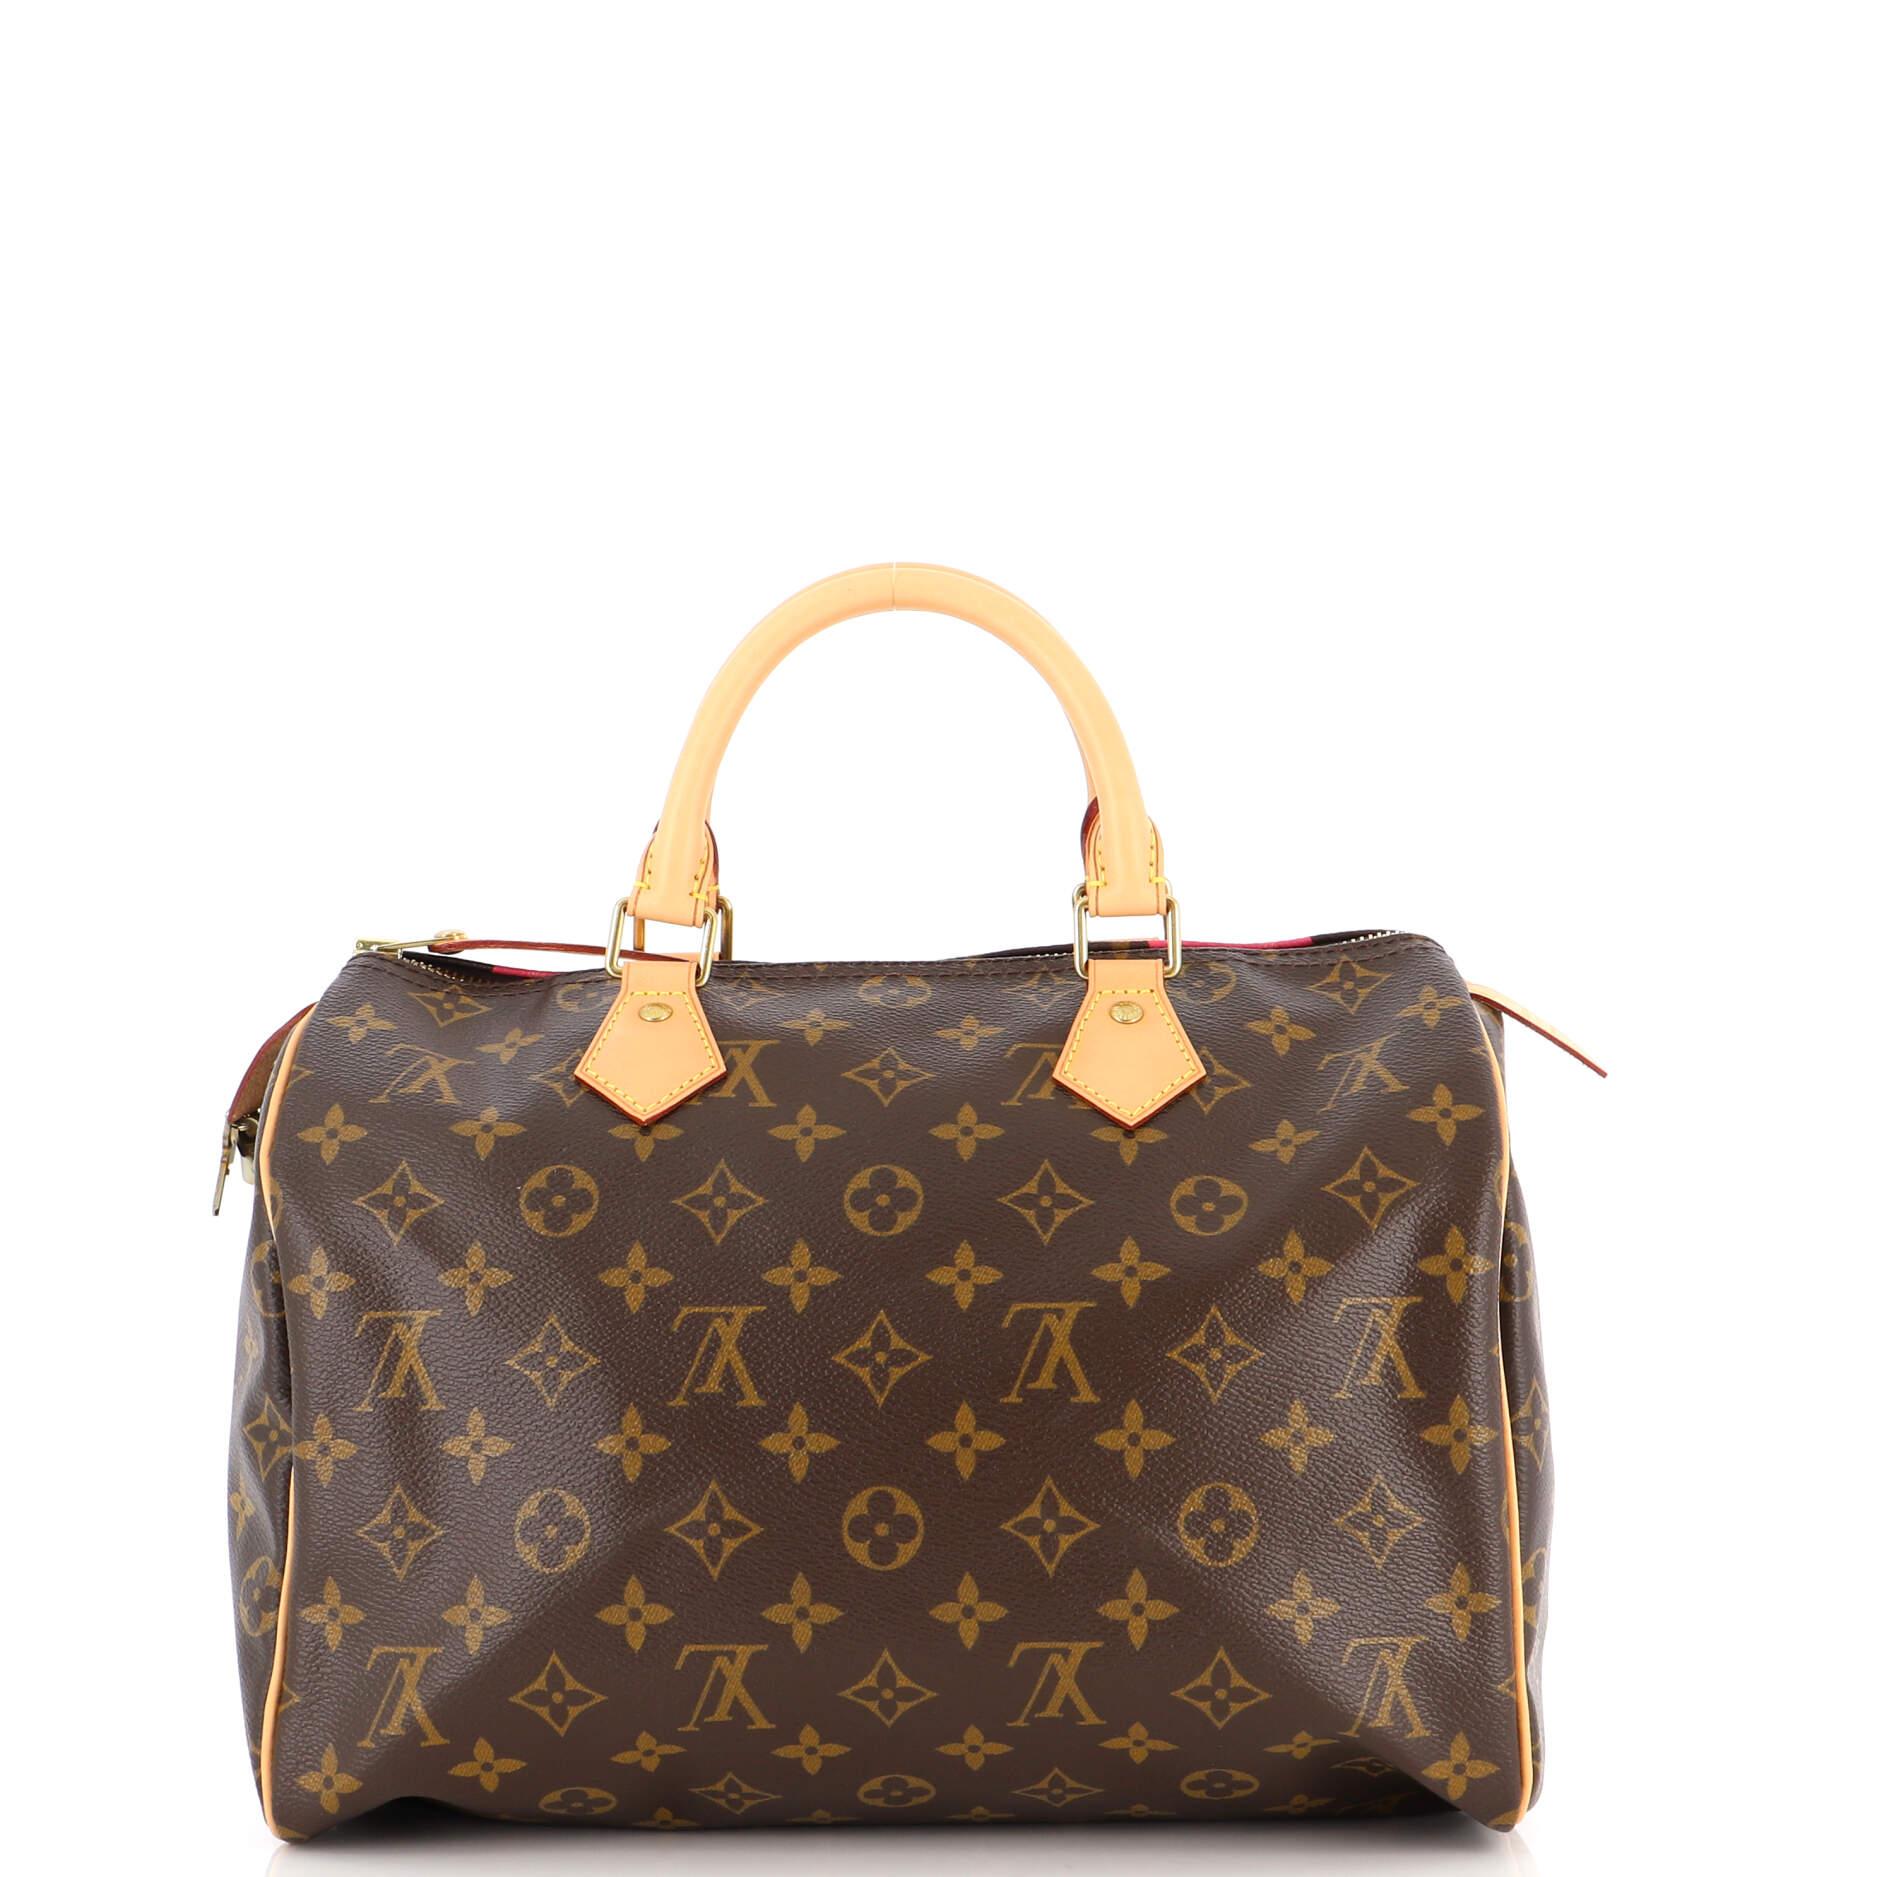 Women's or Men's Louis Vuitton Speedy Handbag Limited Edition V Monogram Canvas 30 For Sale